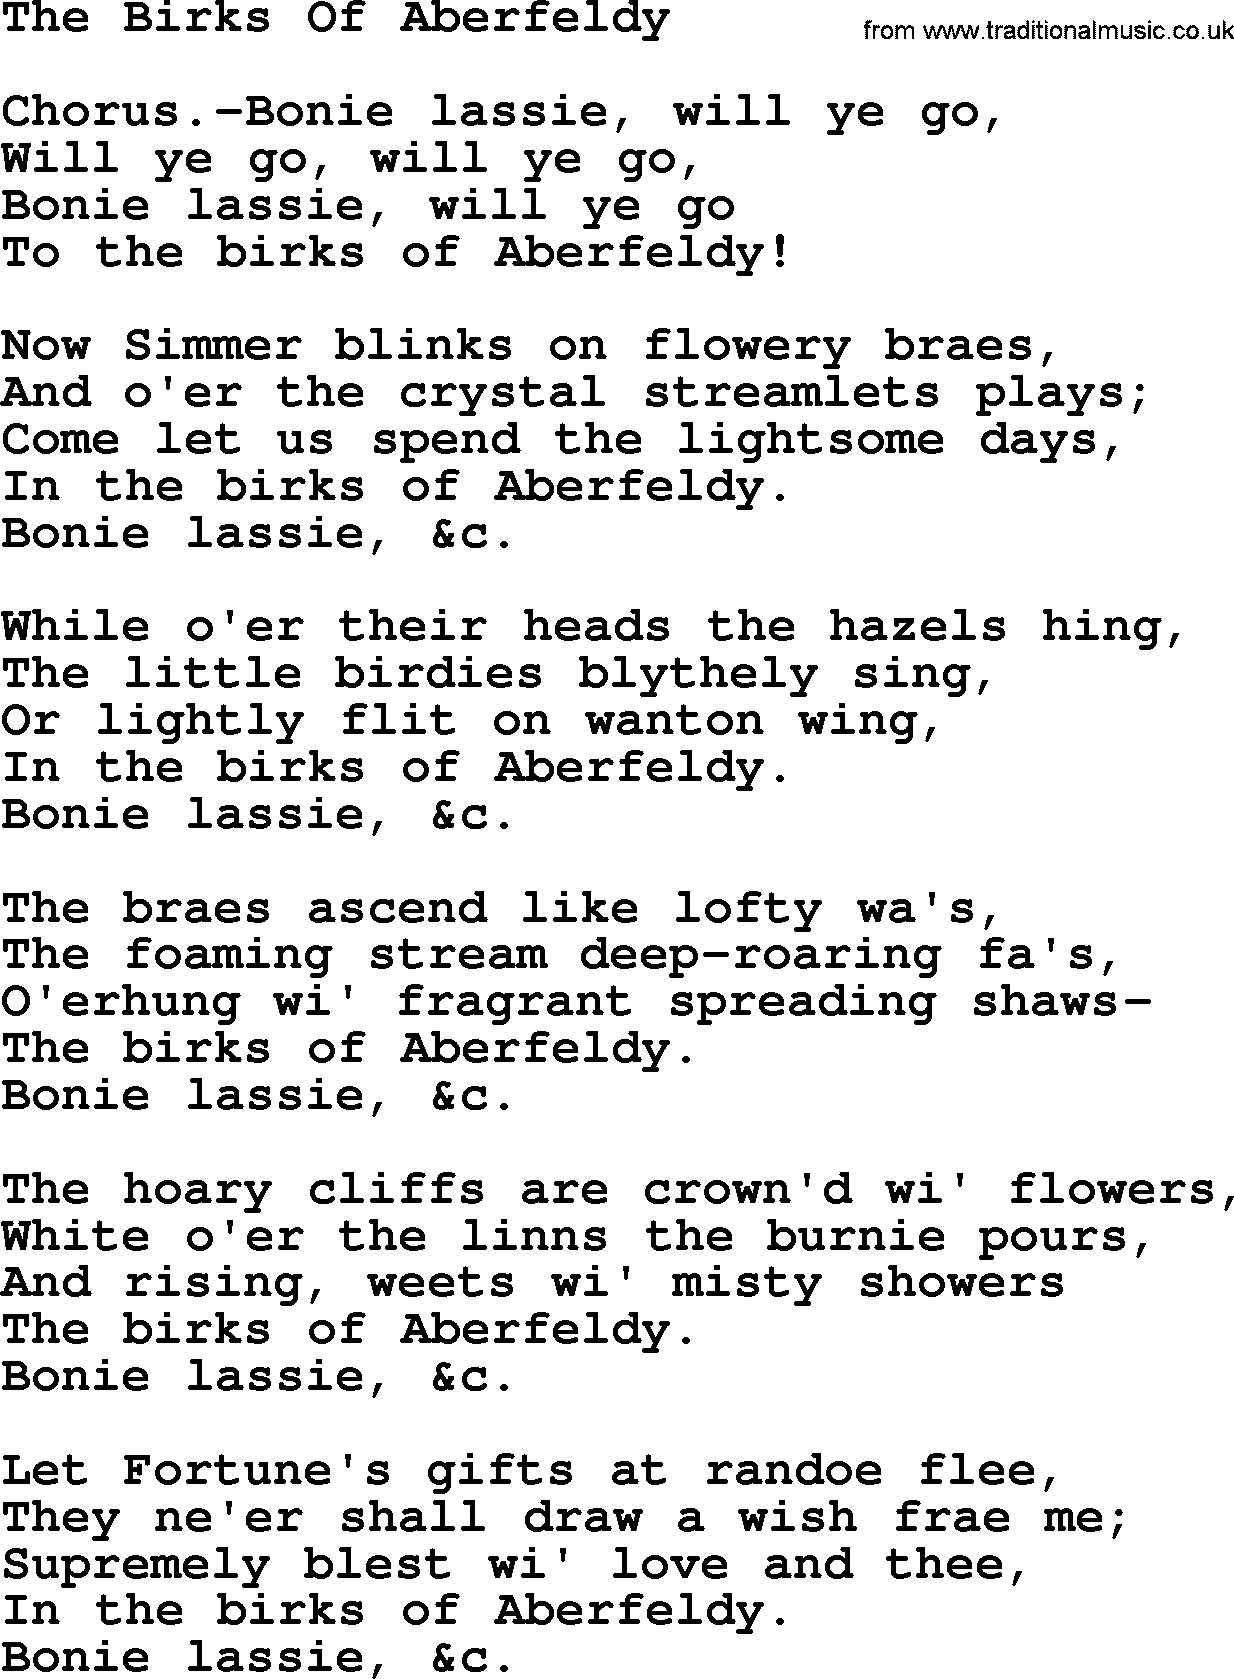 Robert Burns Songs & Lyrics: The Birks Of Aberfeldy